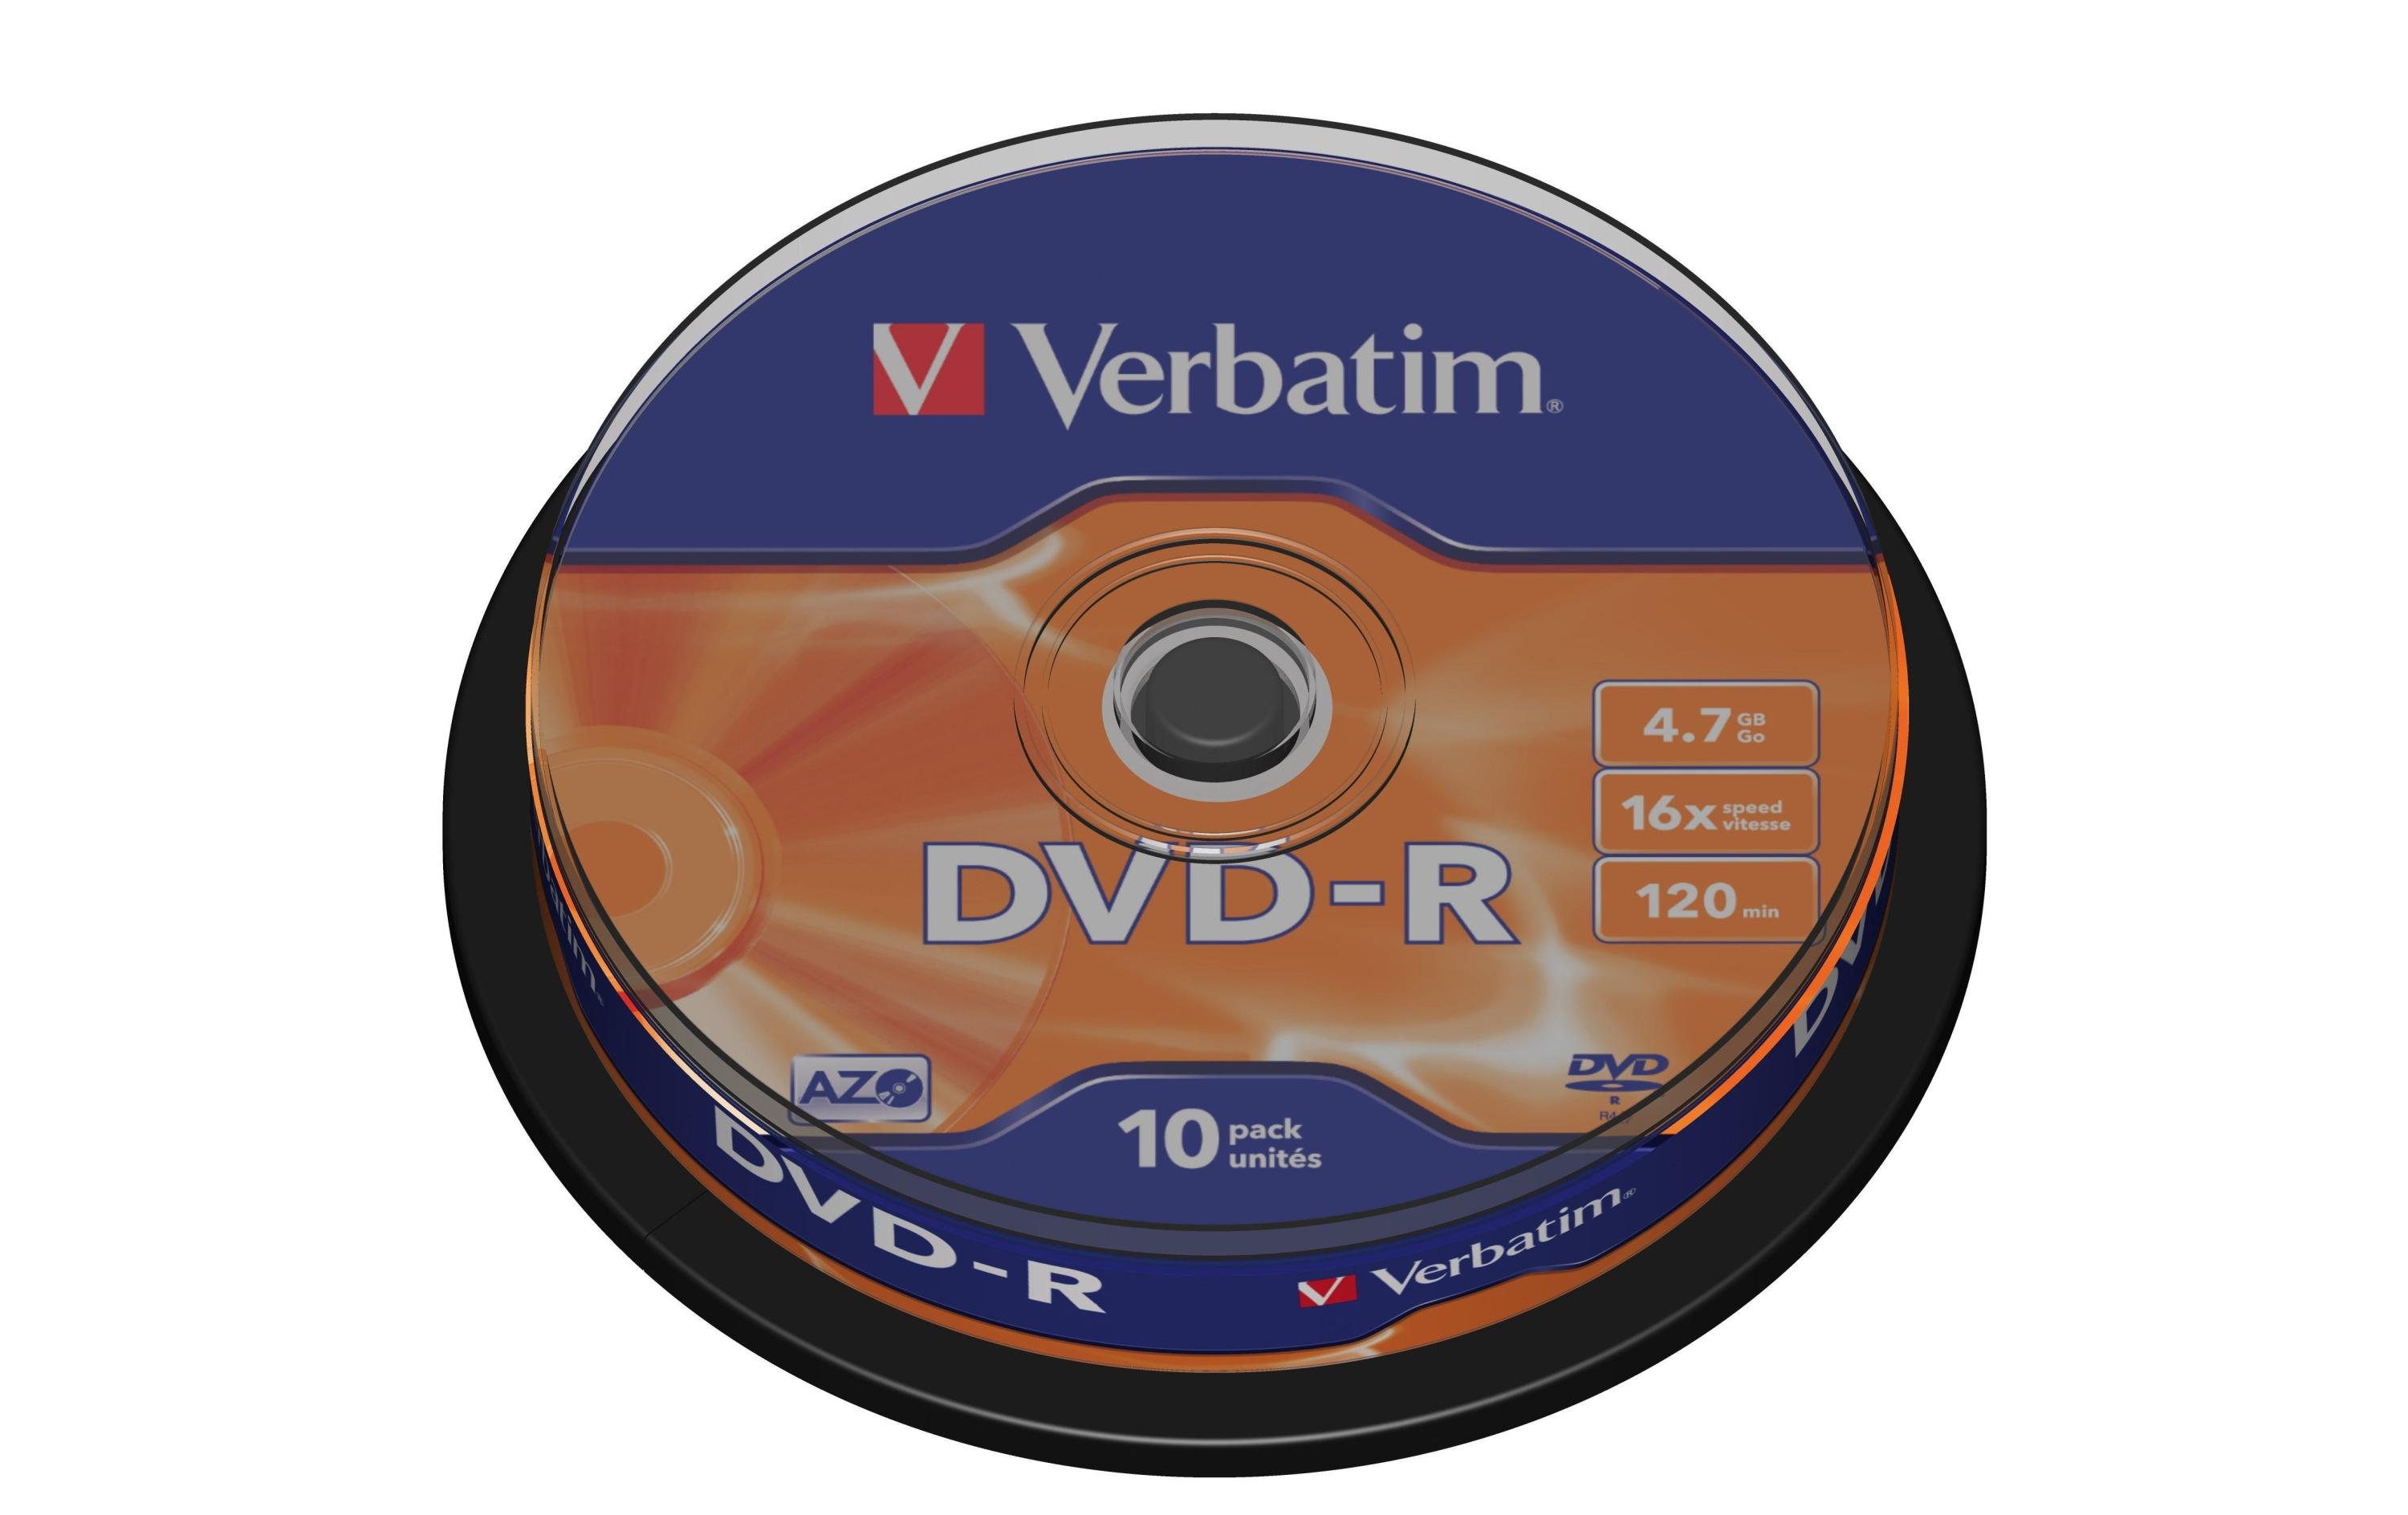 Verbatim DVD-R 4.7 GB, Spindel (10 Stück)